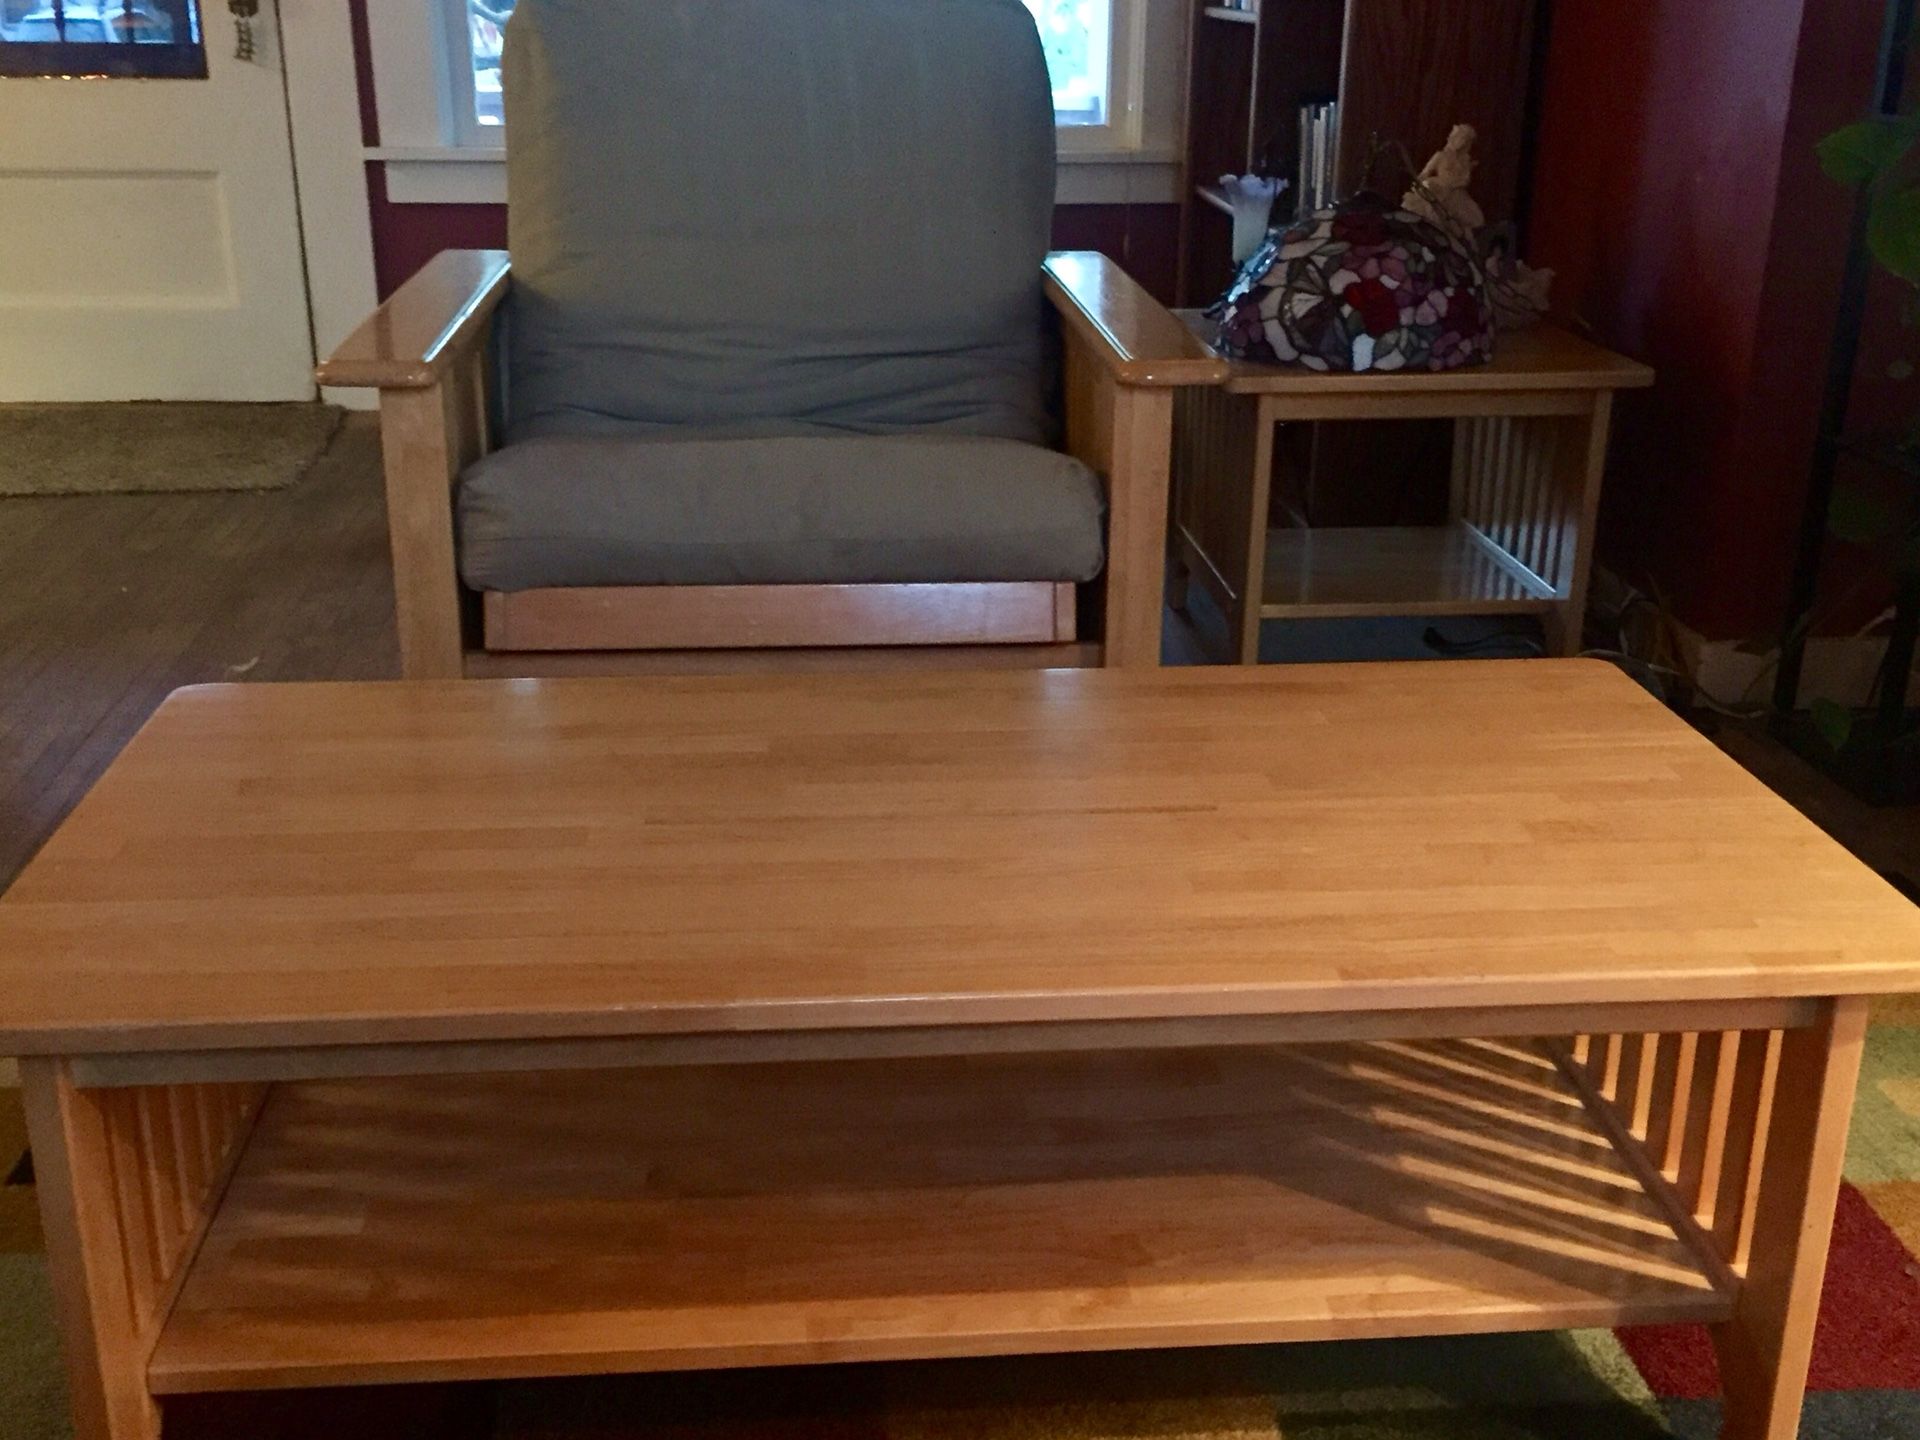 FUTON Chair w/ Storage, Coffee Table, Ottoman, End Table 4-Pc Living Room Set